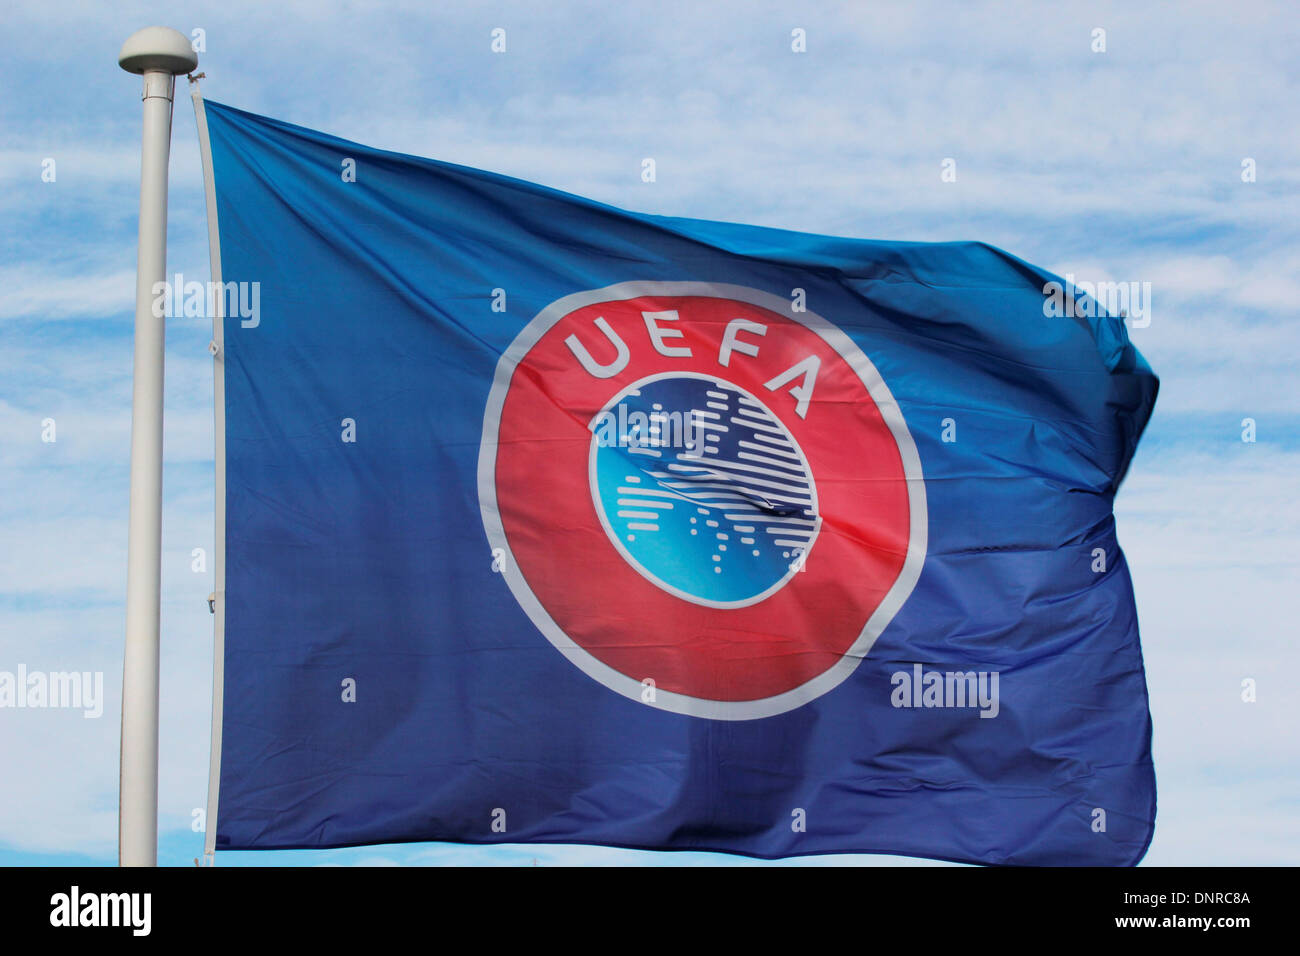 La UEFA bandiera ed emblema Foto Stock